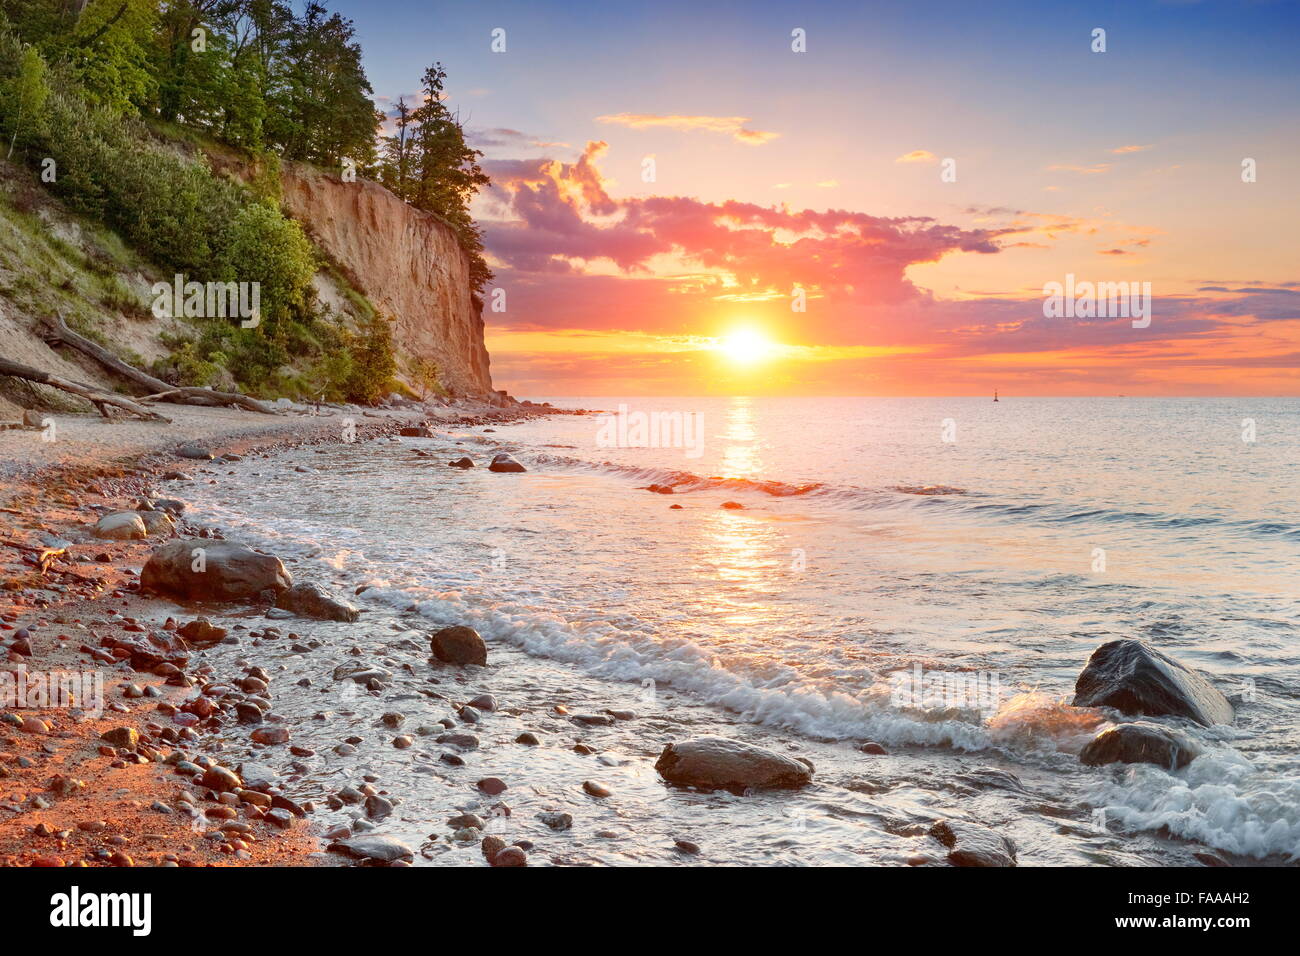 Orlowski Cliff, Mar Baltico al tramonto, Gdynia, Pomerania, Polonia Foto Stock